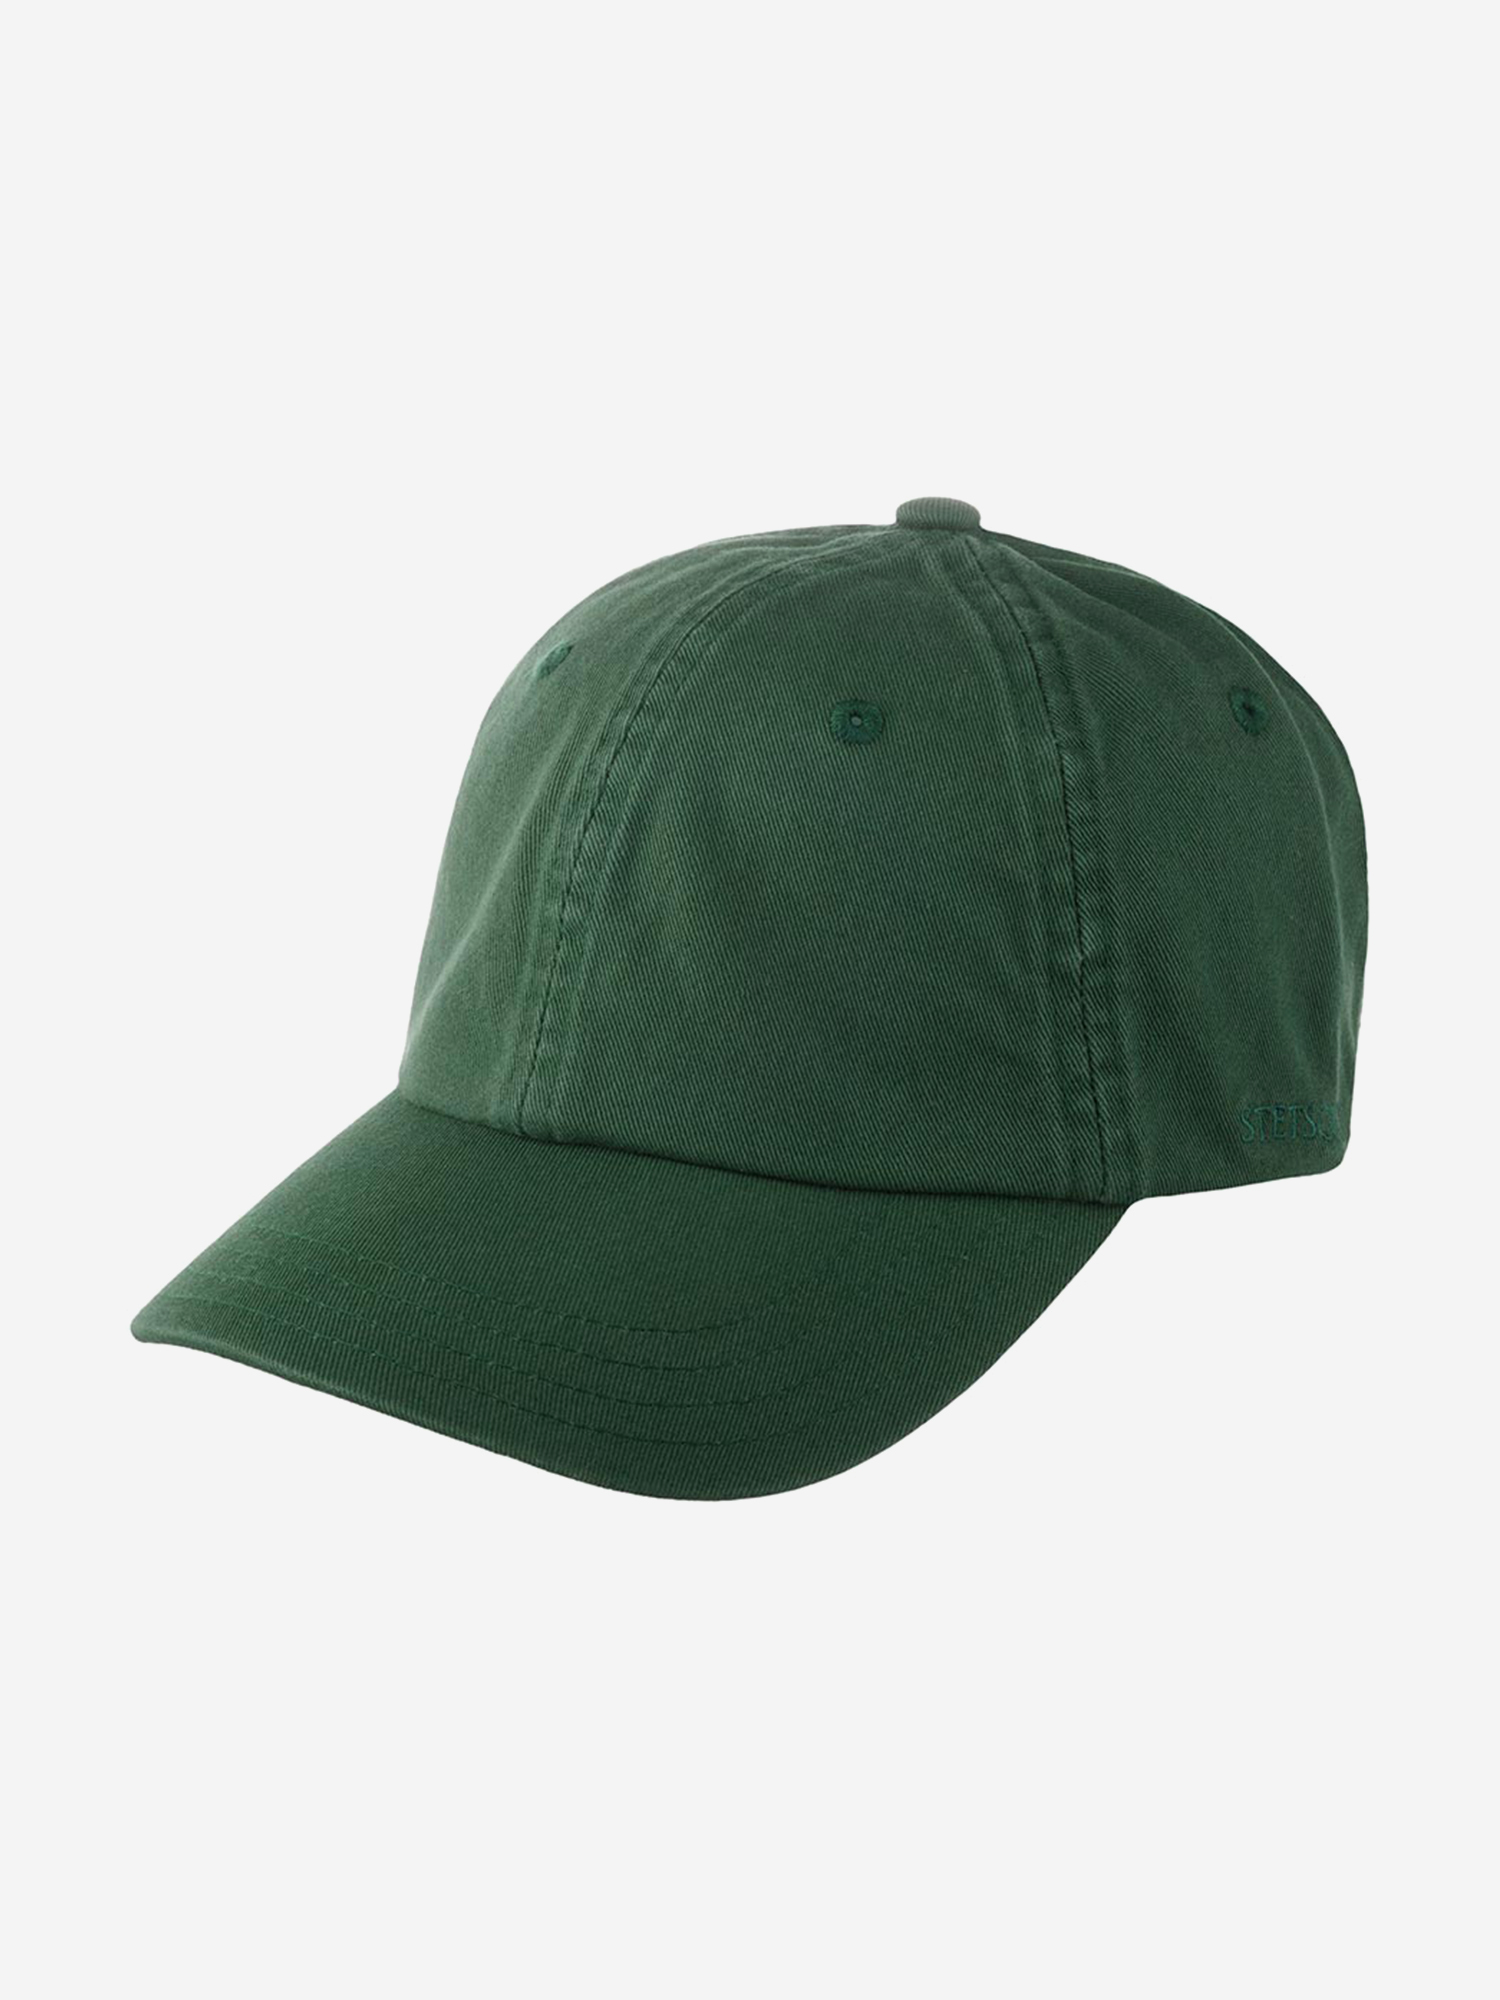 Бейсболка STETSON 7711101 BASEBALL CAP COTTON (зеленый), Зеленый